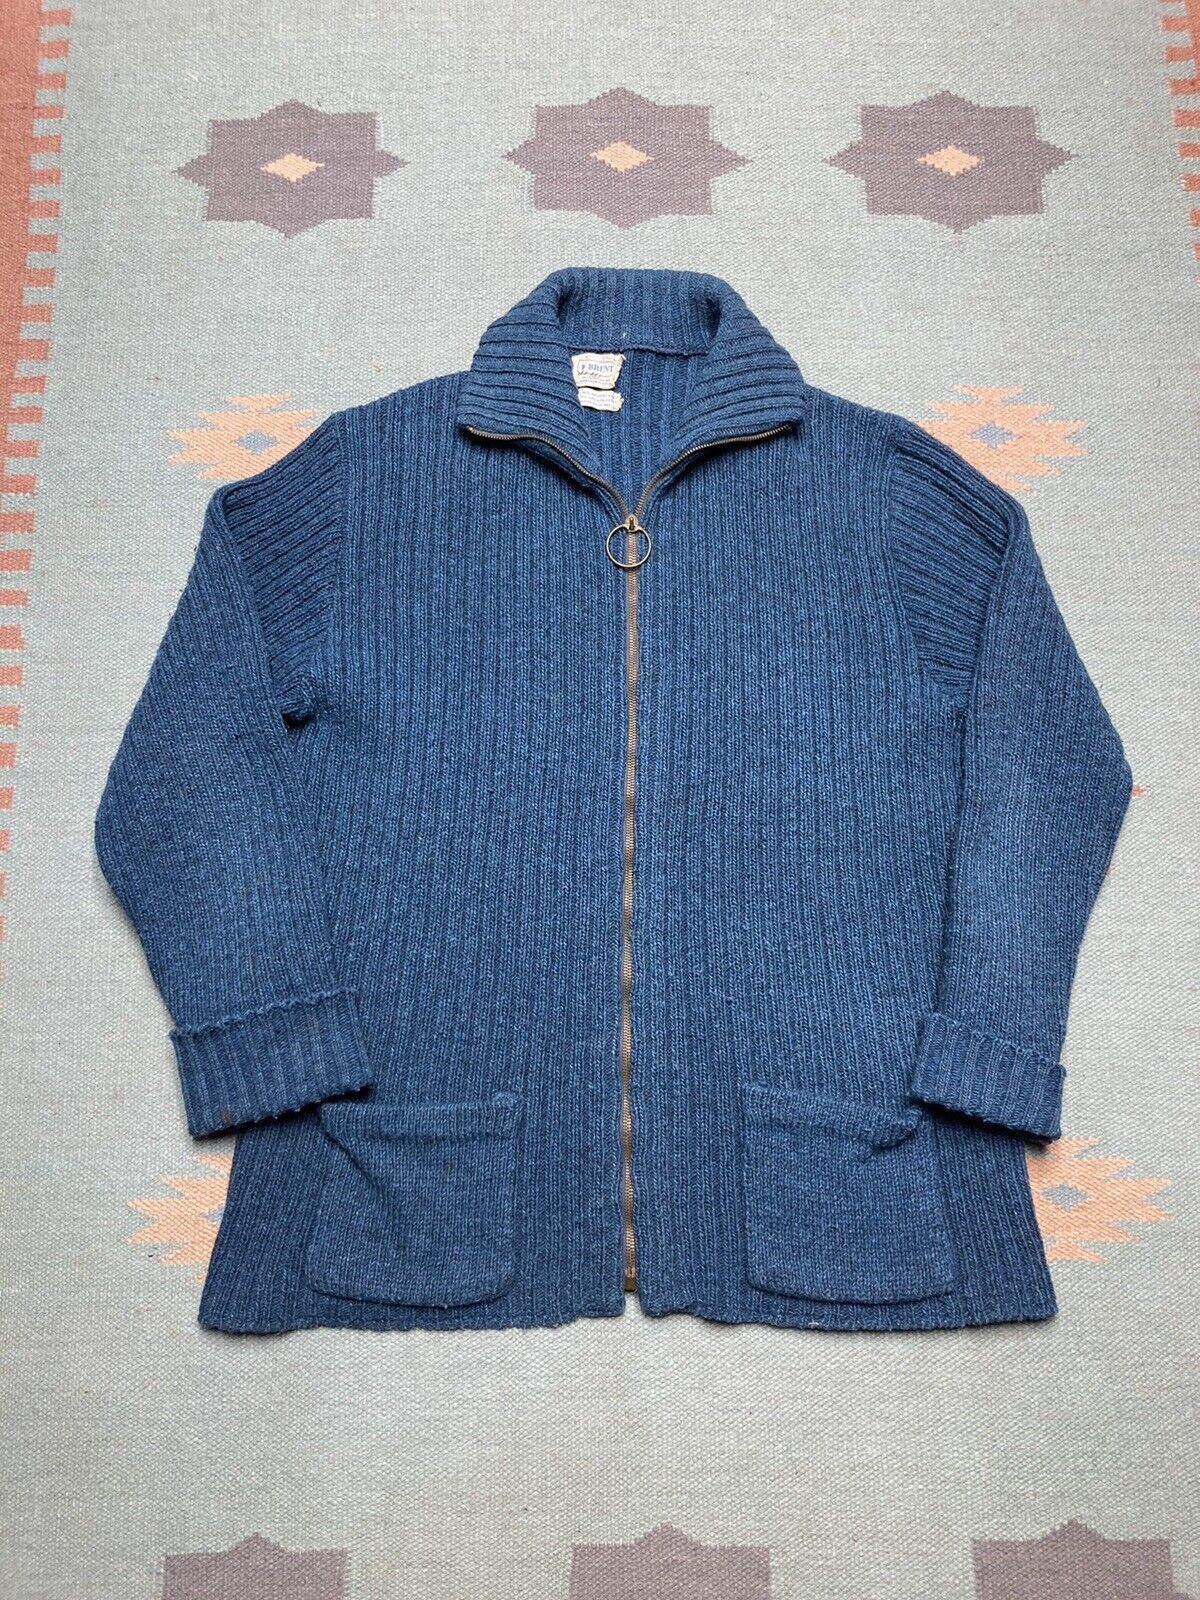 Vintage Vtg 60s Brent cardigan sweater zip knit Montgomery Ward Lg ...